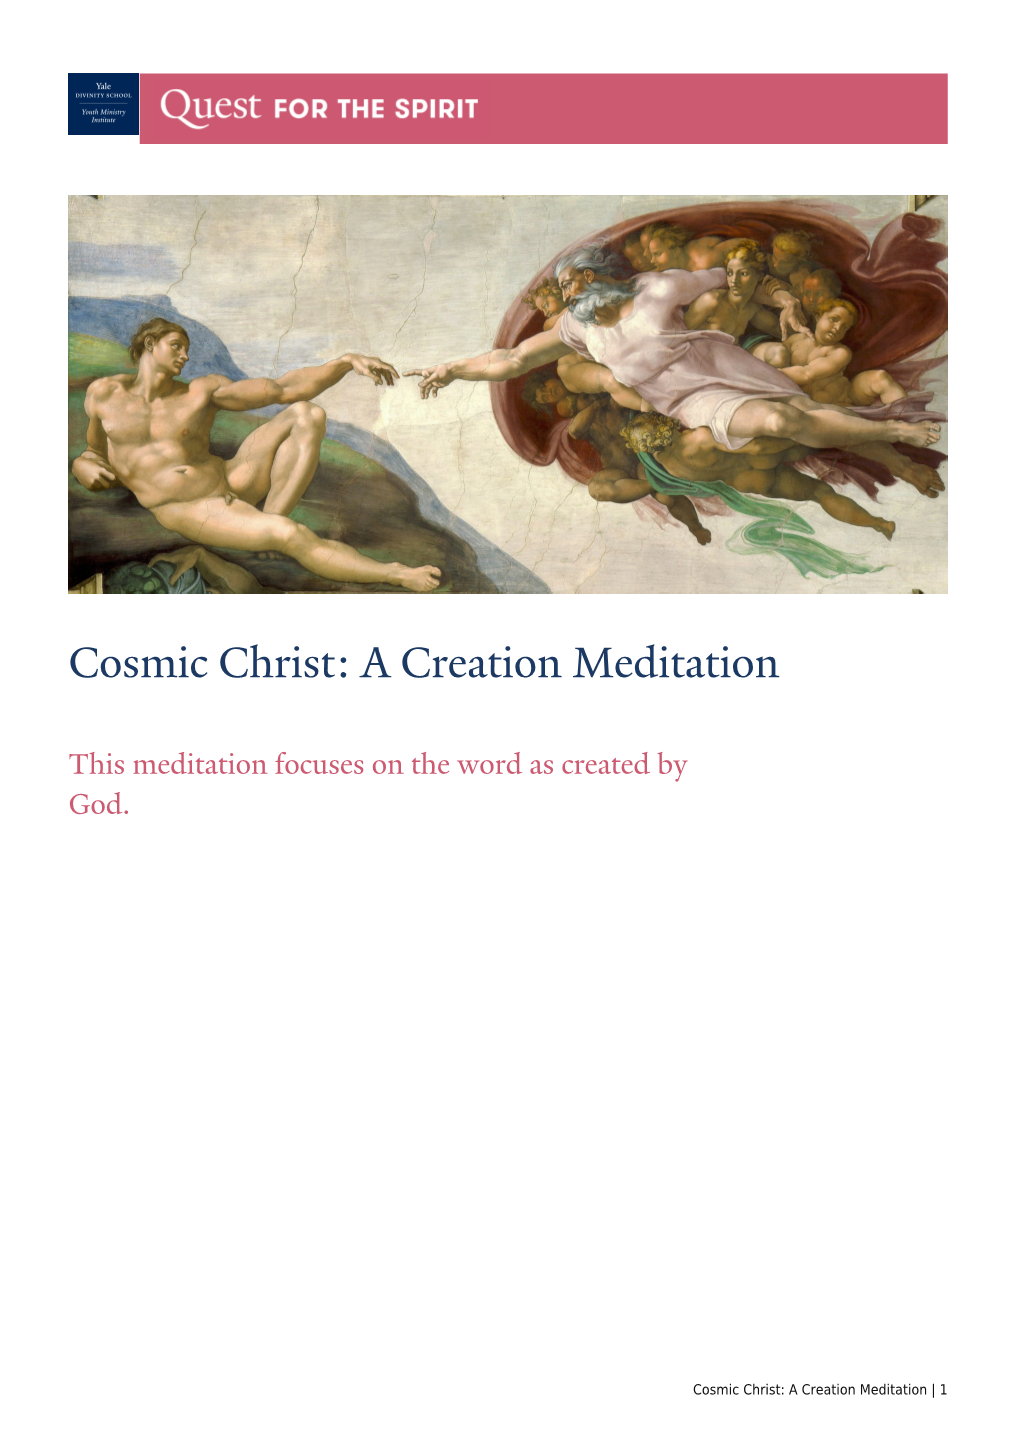 Cosmic Christ: a Creation Meditation